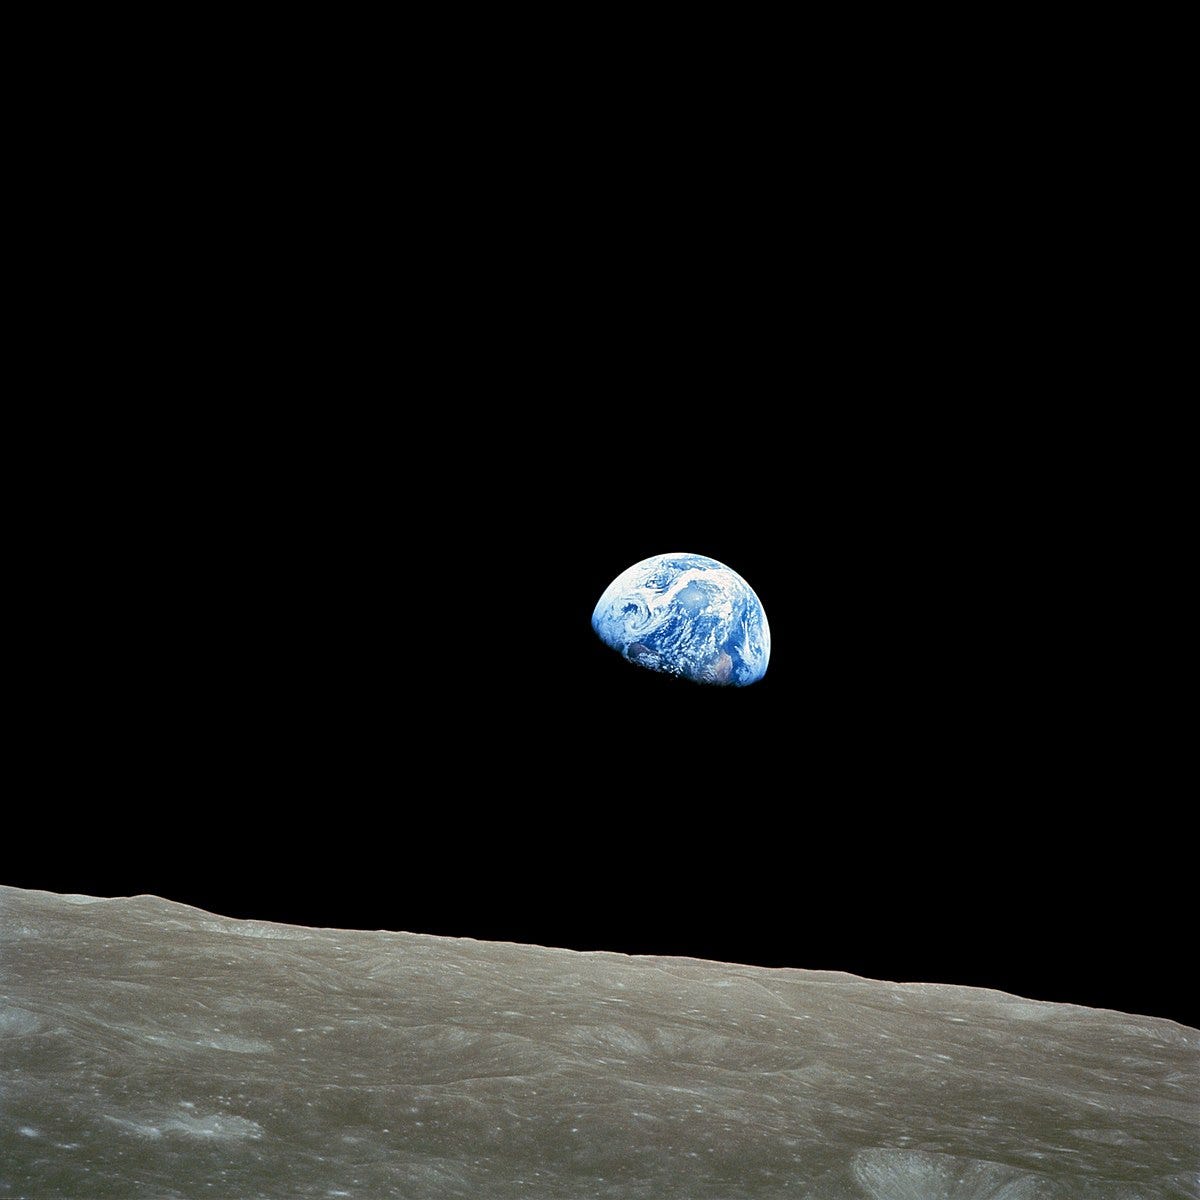 Earthrise - Wikipedia